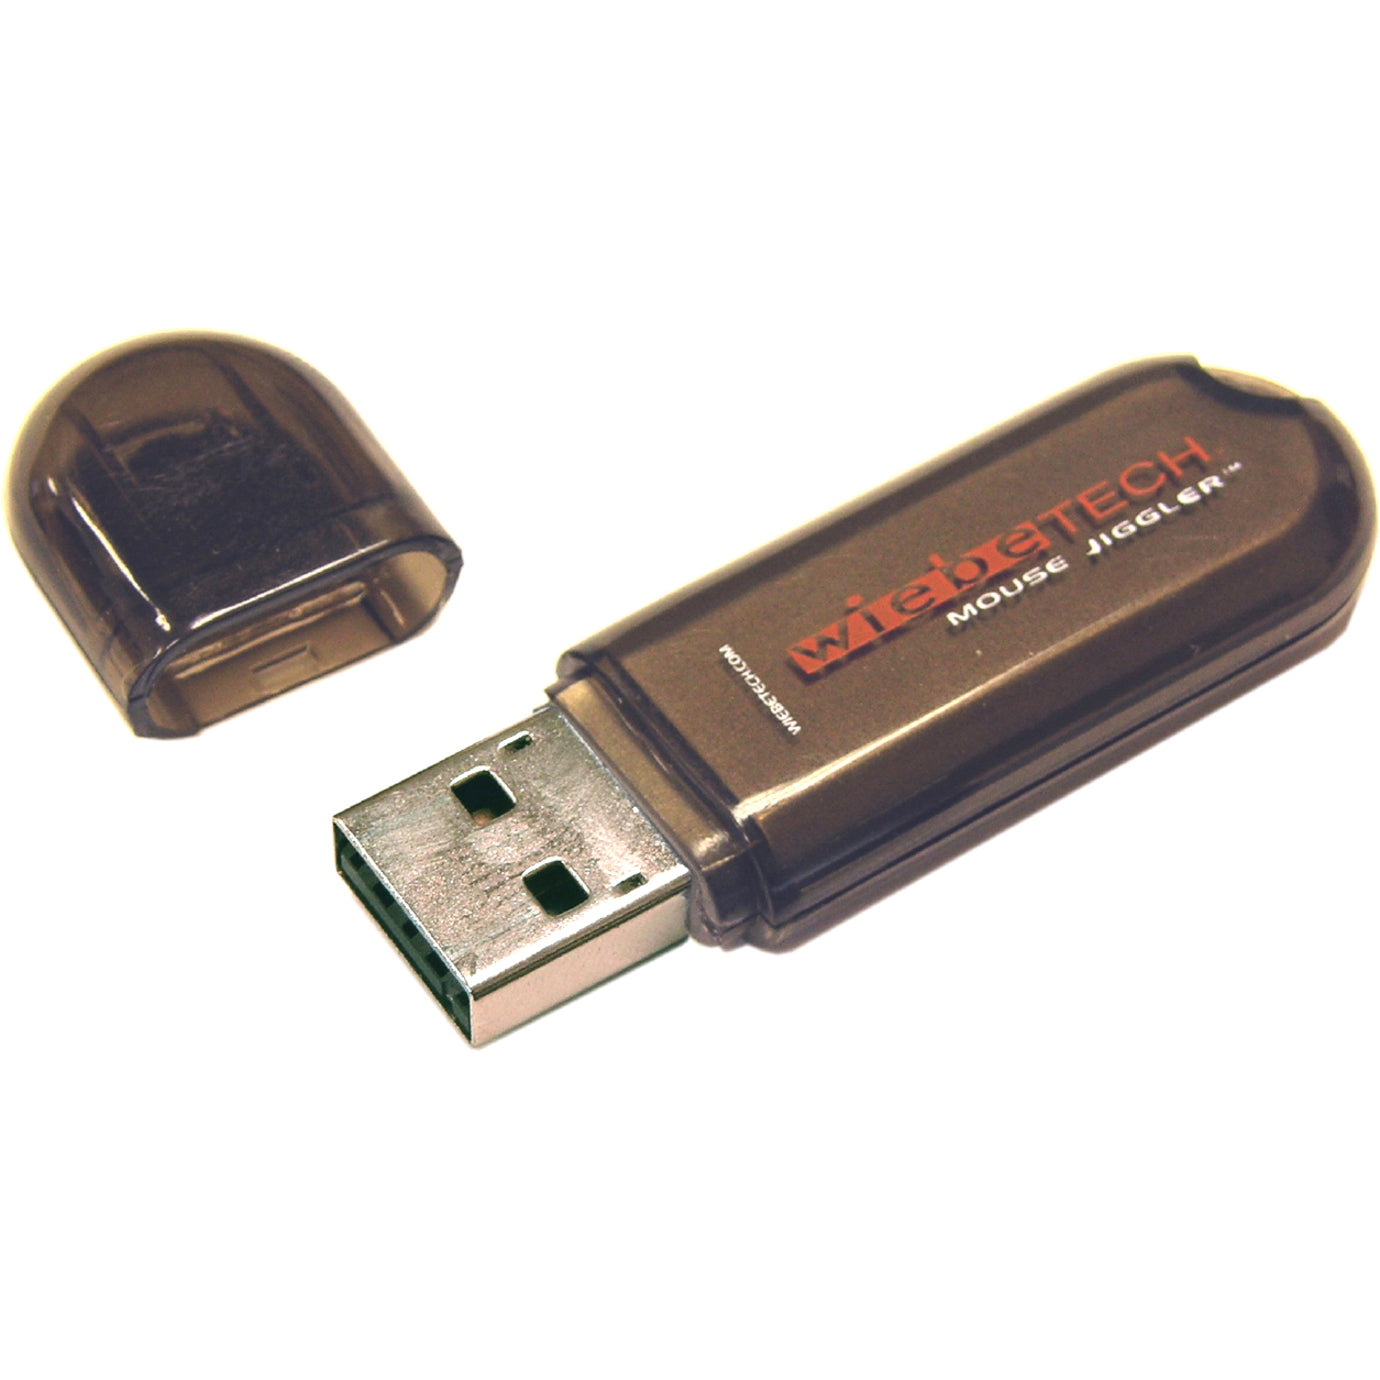 WiebeTech 30200-0100-0011 MJ-1 Mouse Jiggler, USB 1.1/2.0, Windows & Mac OS Compatible